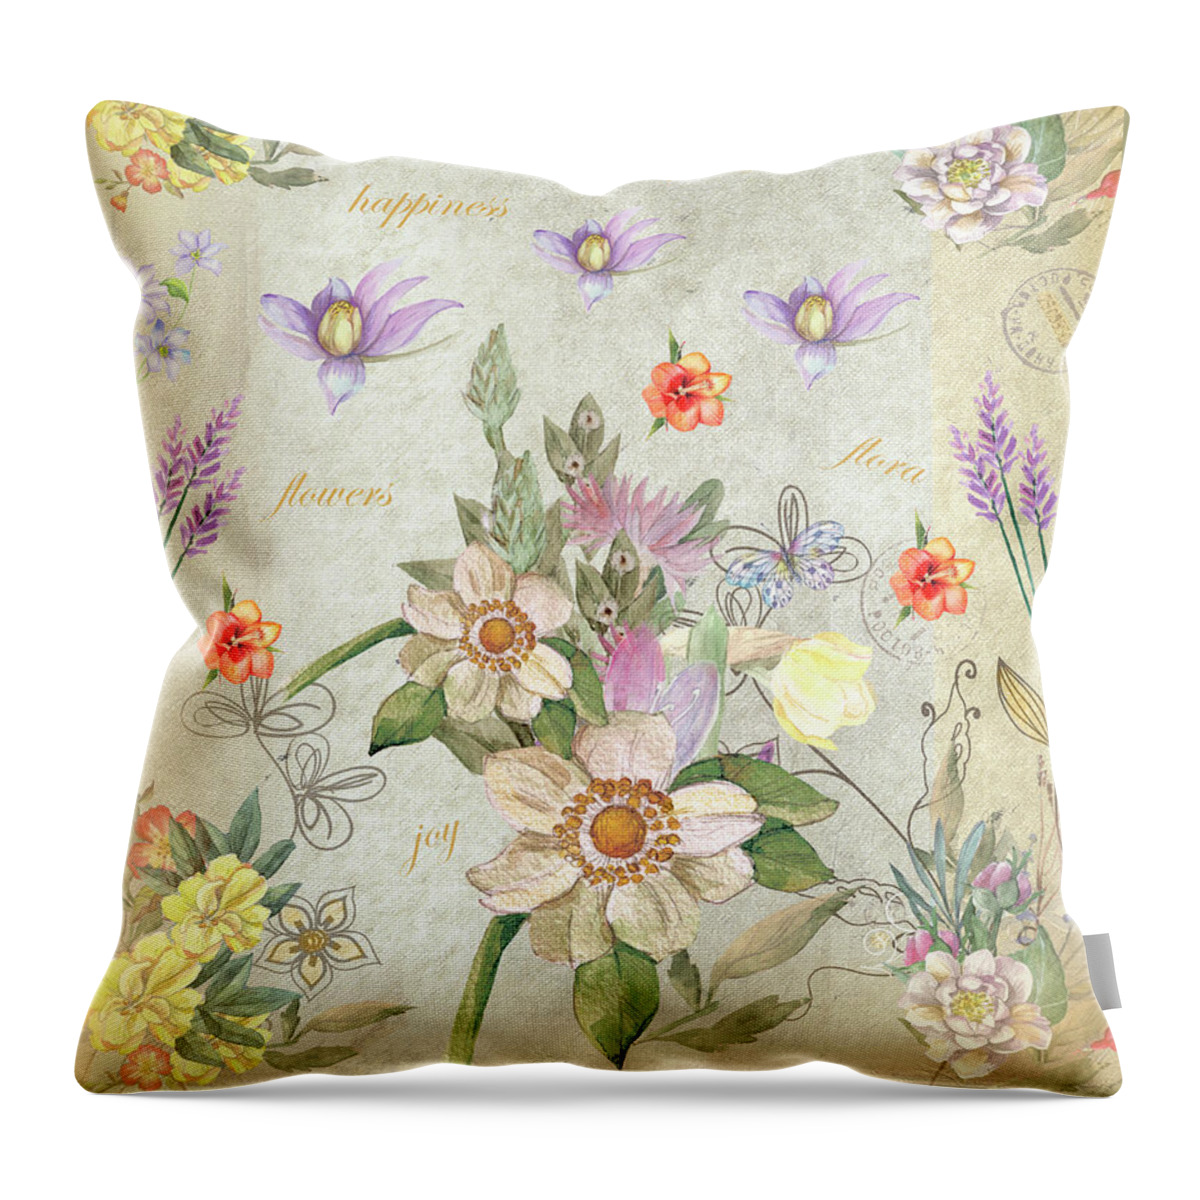 Spring Throw Pillow featuring the mixed media Springtime Flower Design 2 by Johanna Hurmerinta